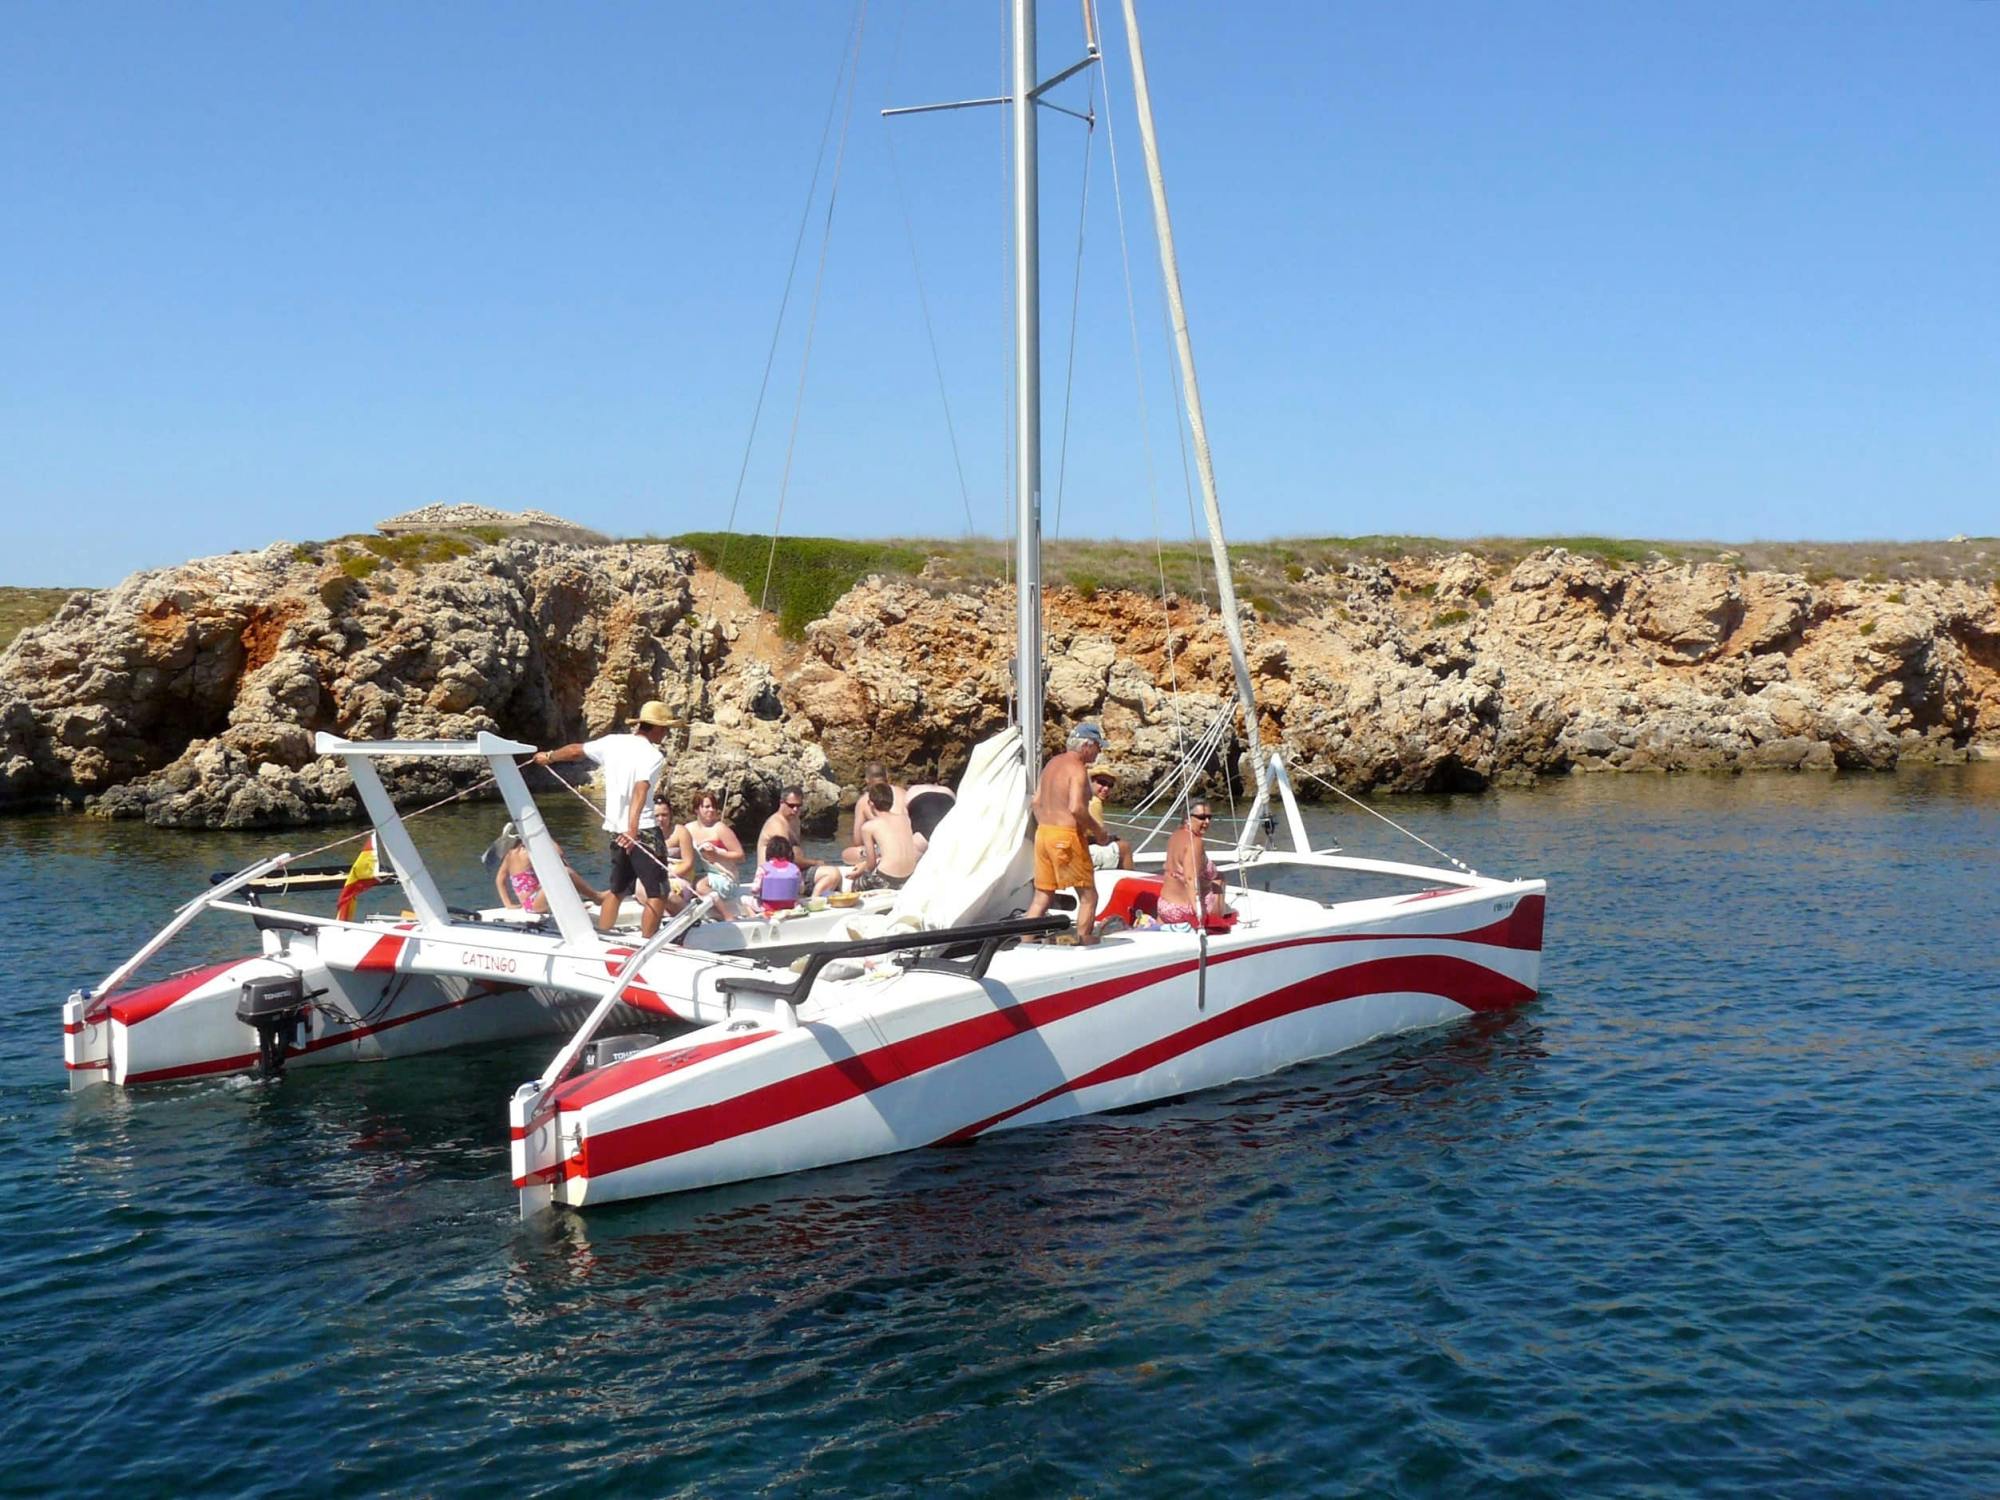 Lej en katamaran på Menorca